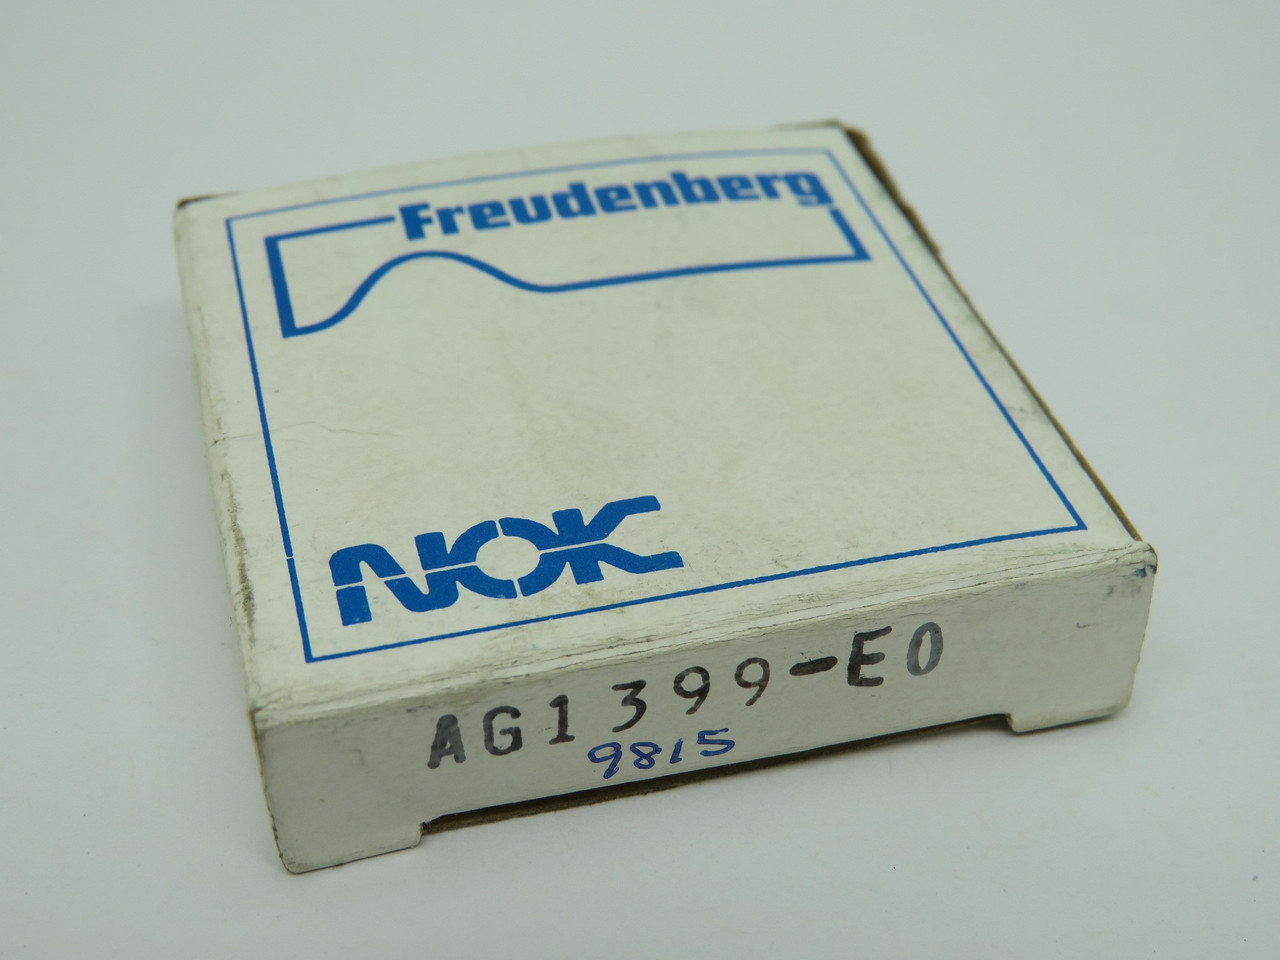 Freudenberg-NOK AG1399-E0 Oil Seal 1.000" ID 1.250" OD 0.126" W ! NEW !